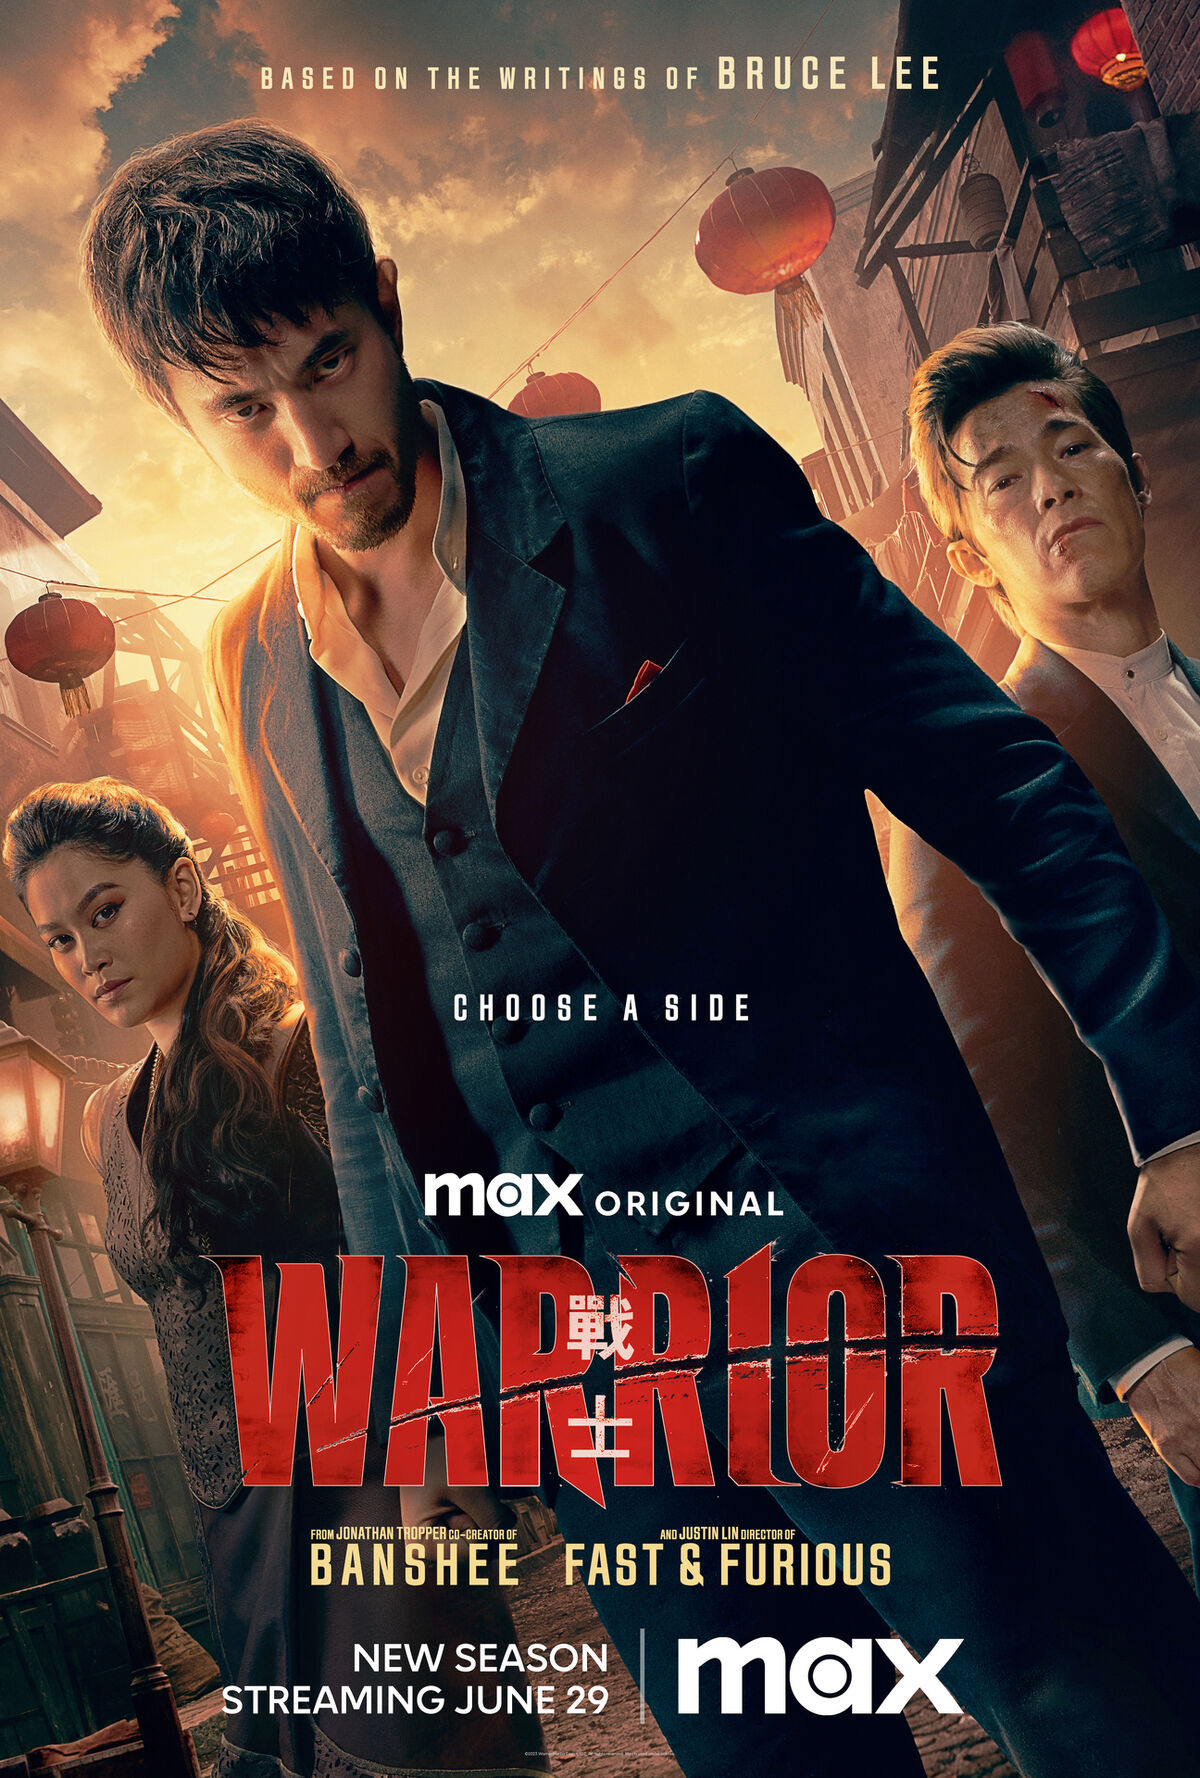 Warrior': Mark Dacascos & Chelsea Muirhead Joins Season 3 Cast